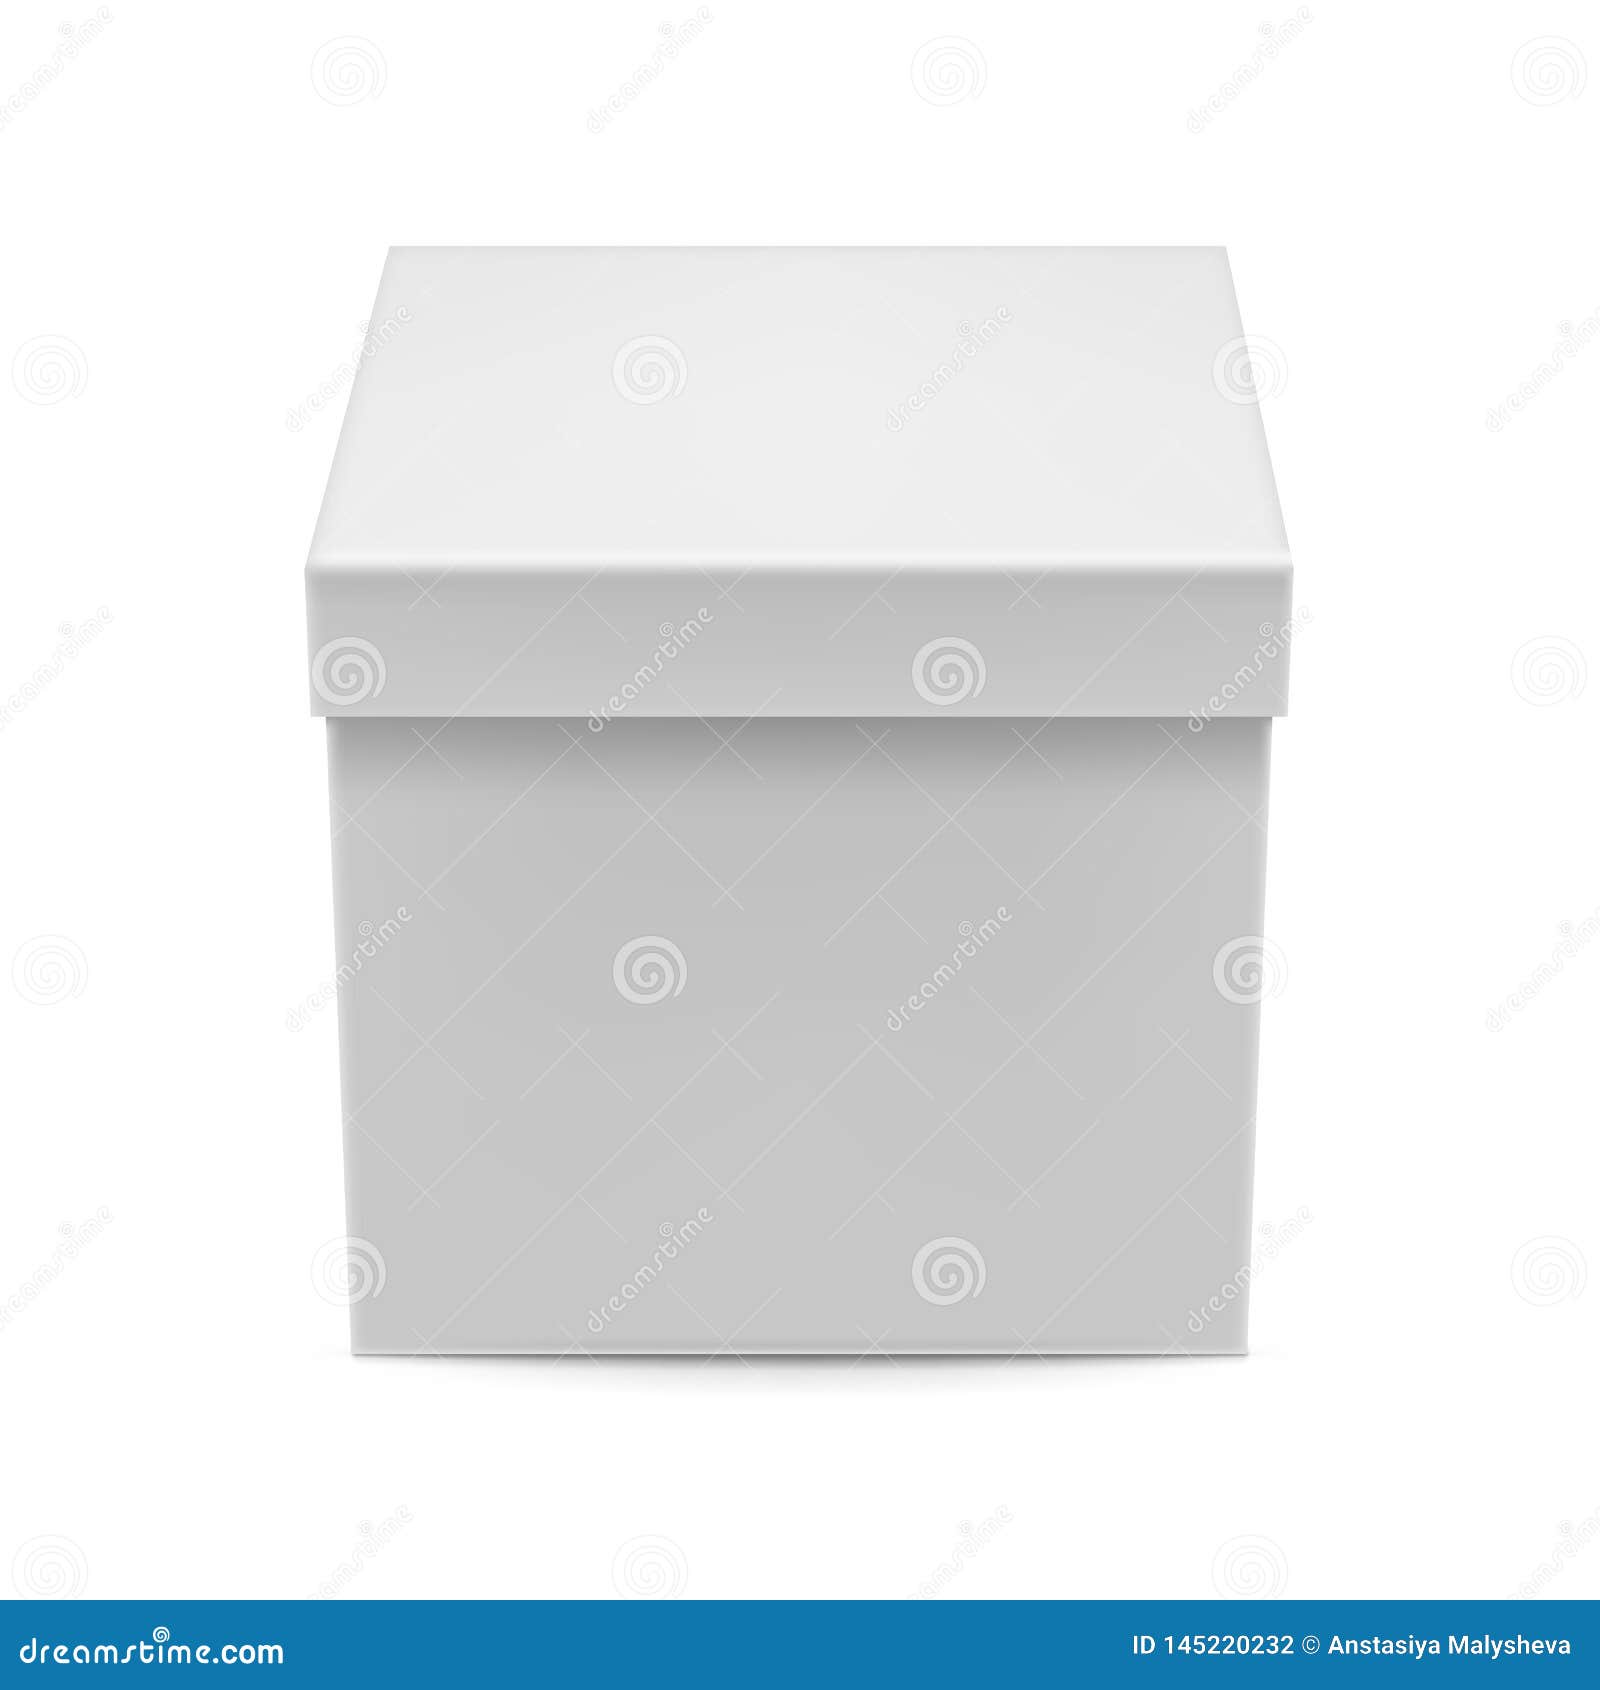 Download Closed White Cardboard Box Mockup Stock Vector ...